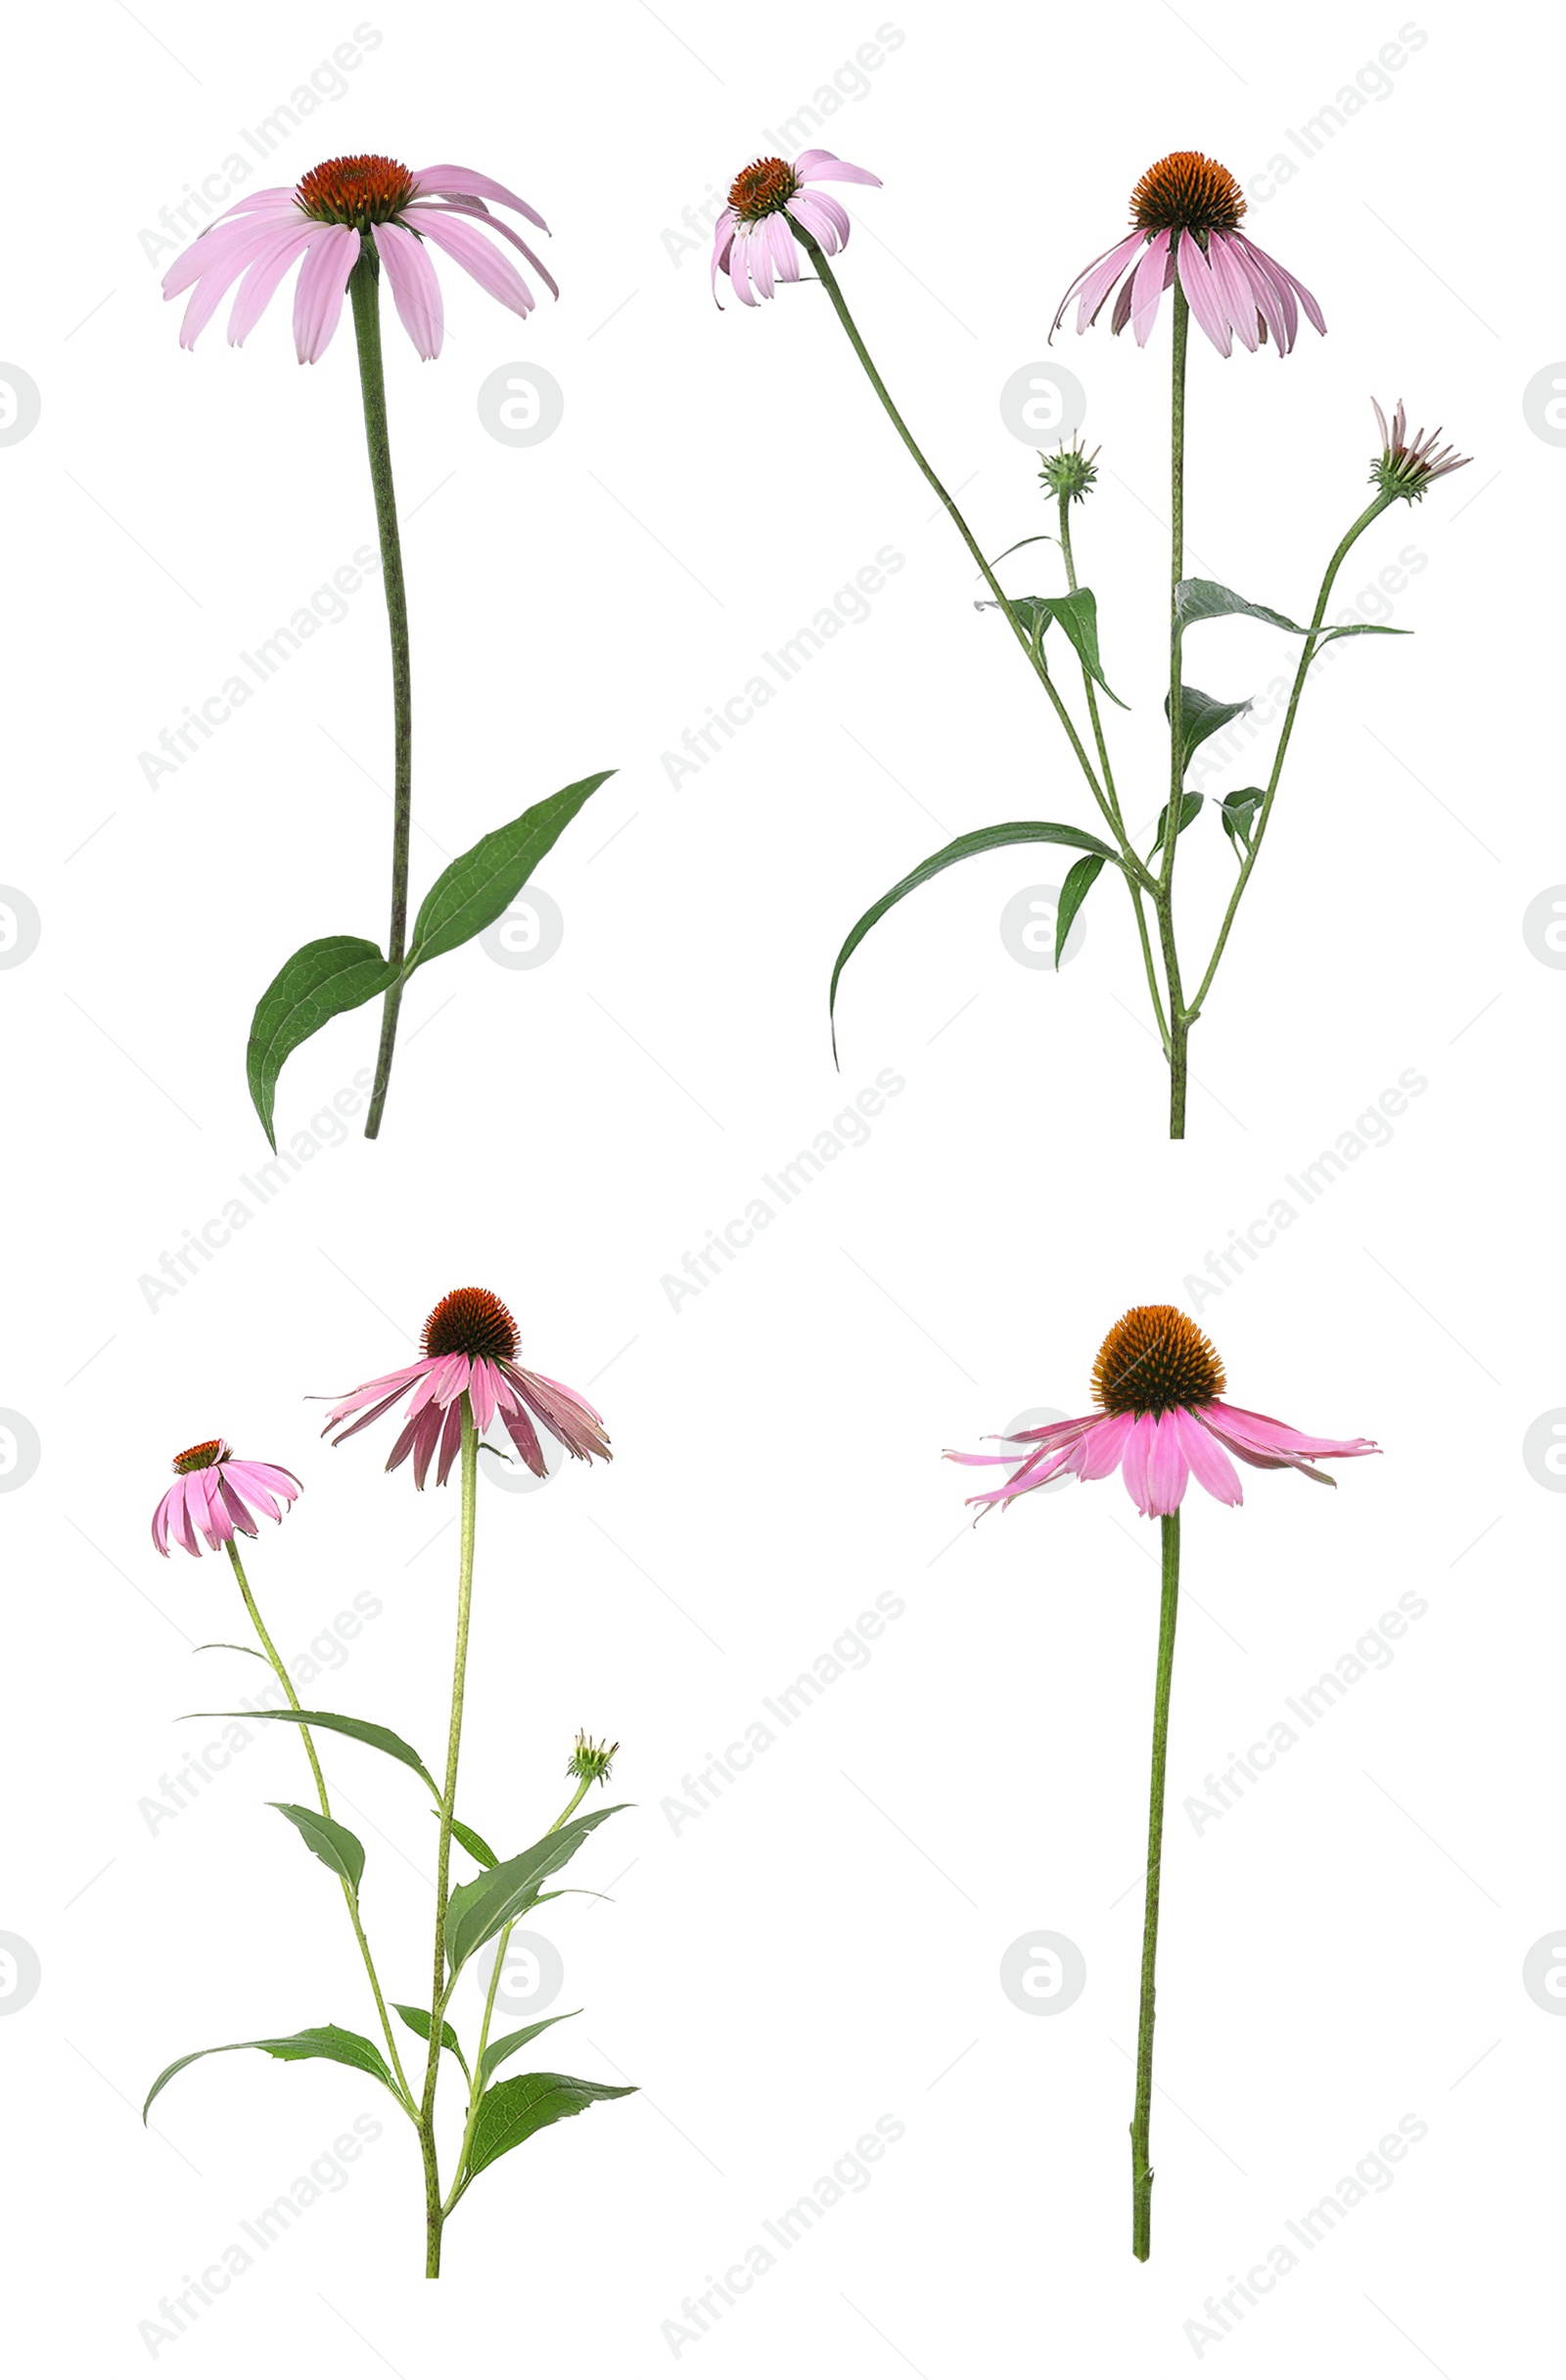 Image of Set with beautiful echinacea flowers on white background